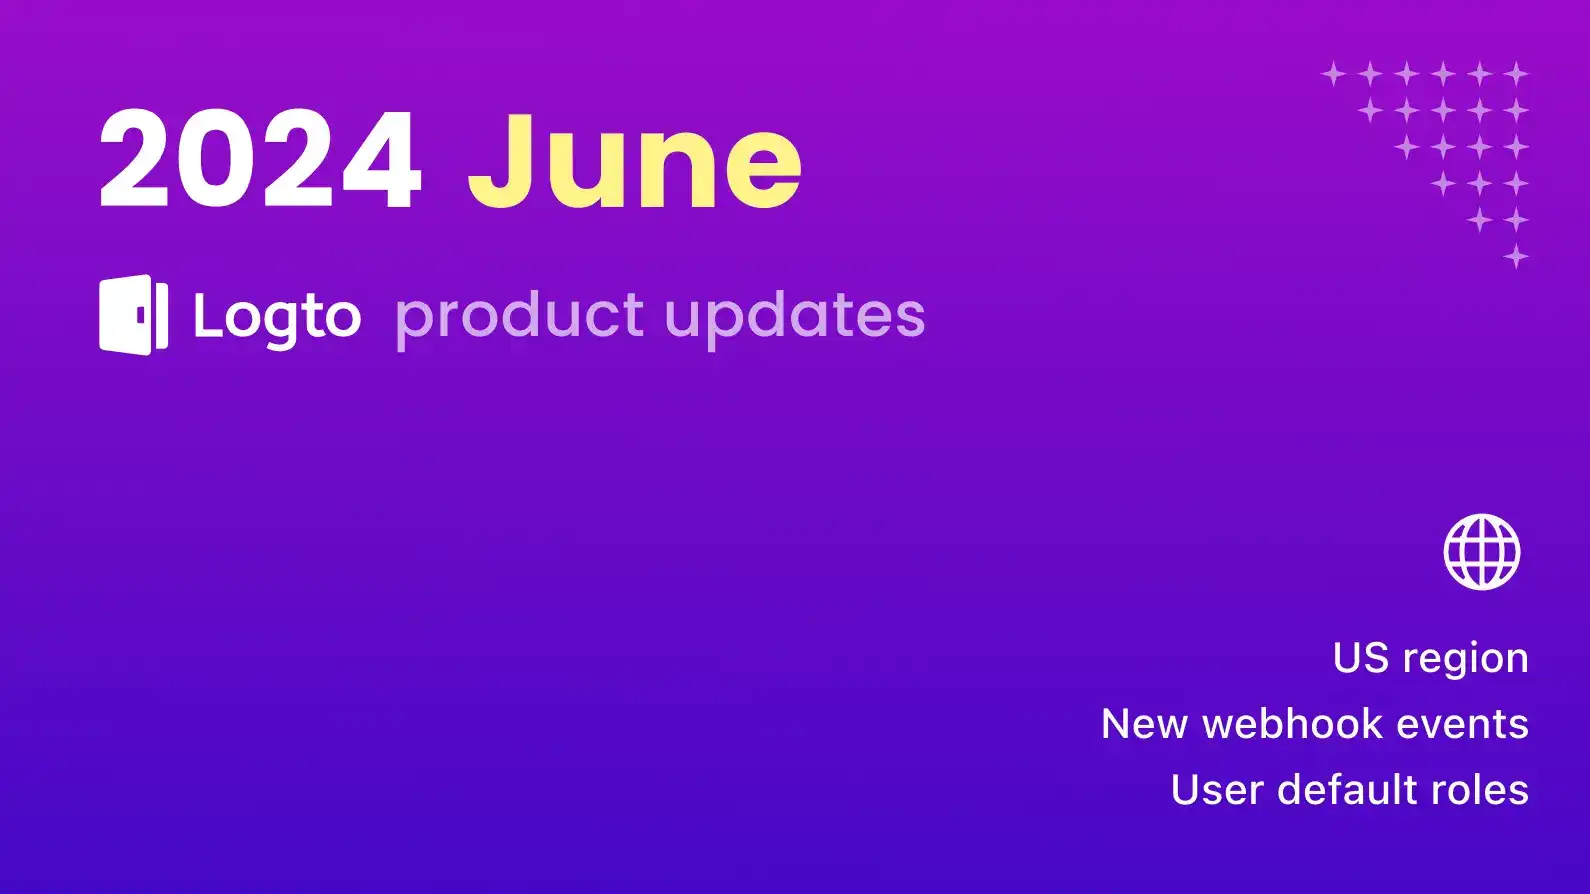 Logto product updates (2024 June)